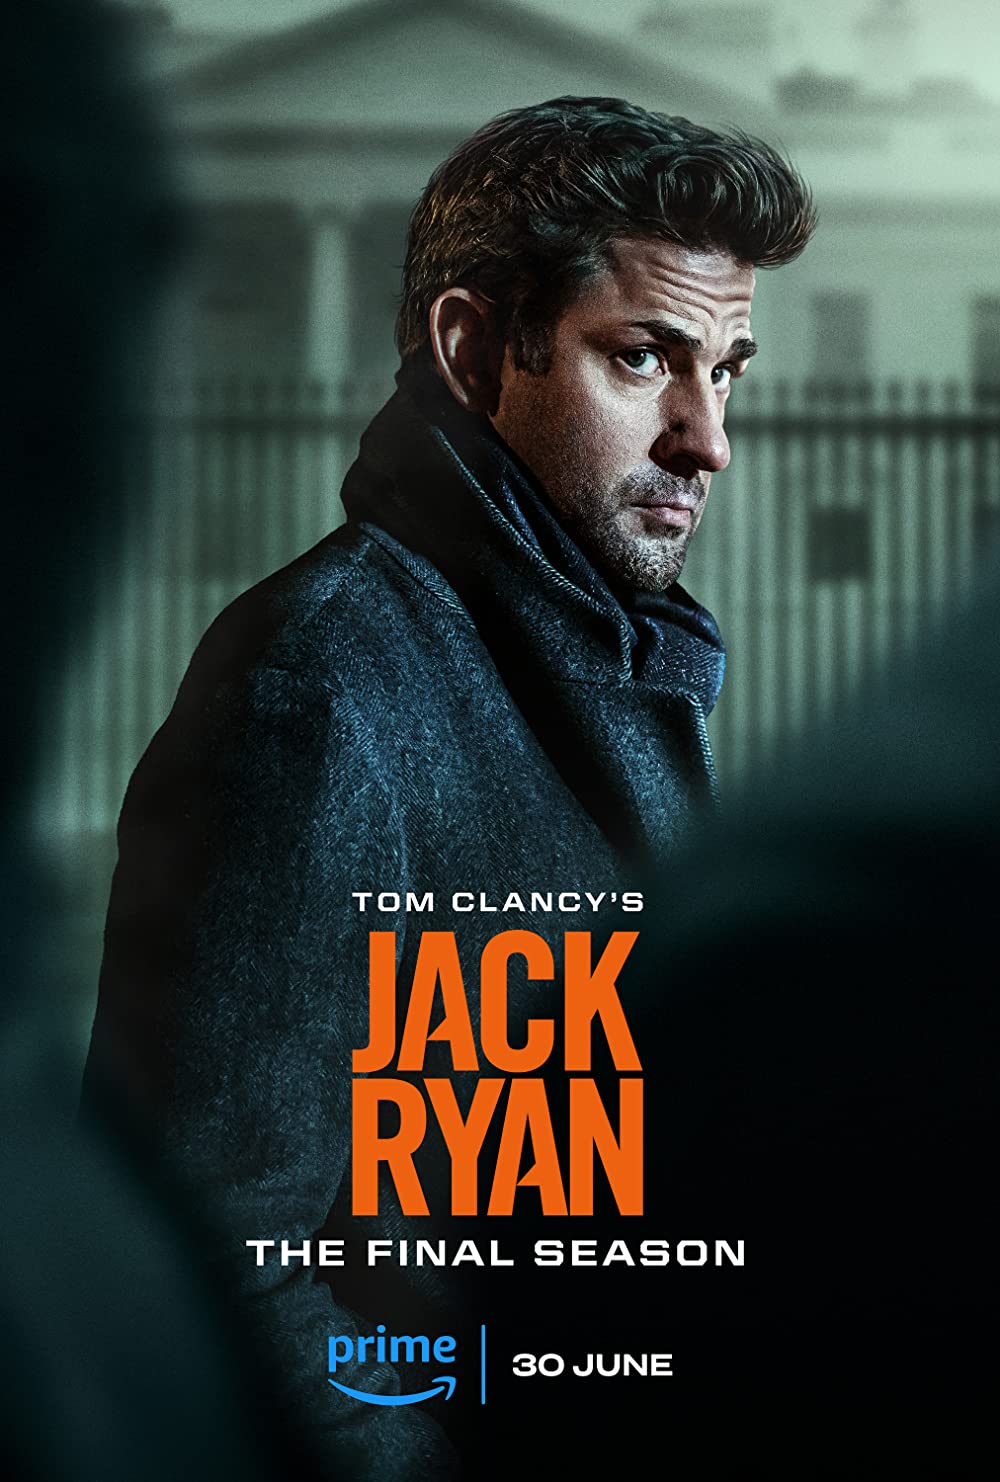 Tom Clancys Jack Ryan S04E03 Sacrifices 1080p AMZN WEB-DL DDP5 1 H 264-NTb mkv